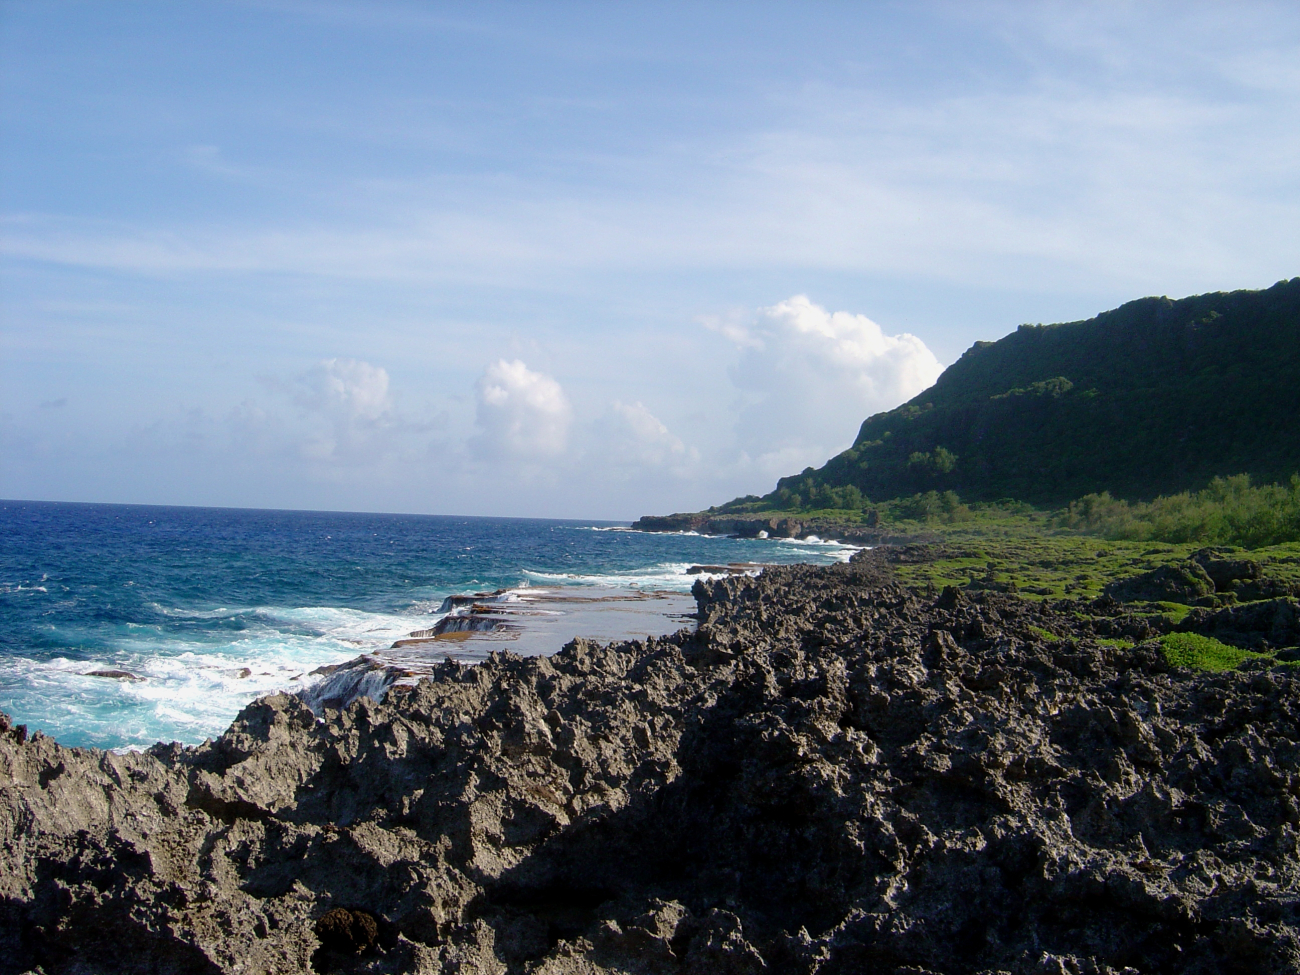 Sharp eroded coral rock makes a treacherous path down to an erodedwave-cut terrace on the Guam coastline